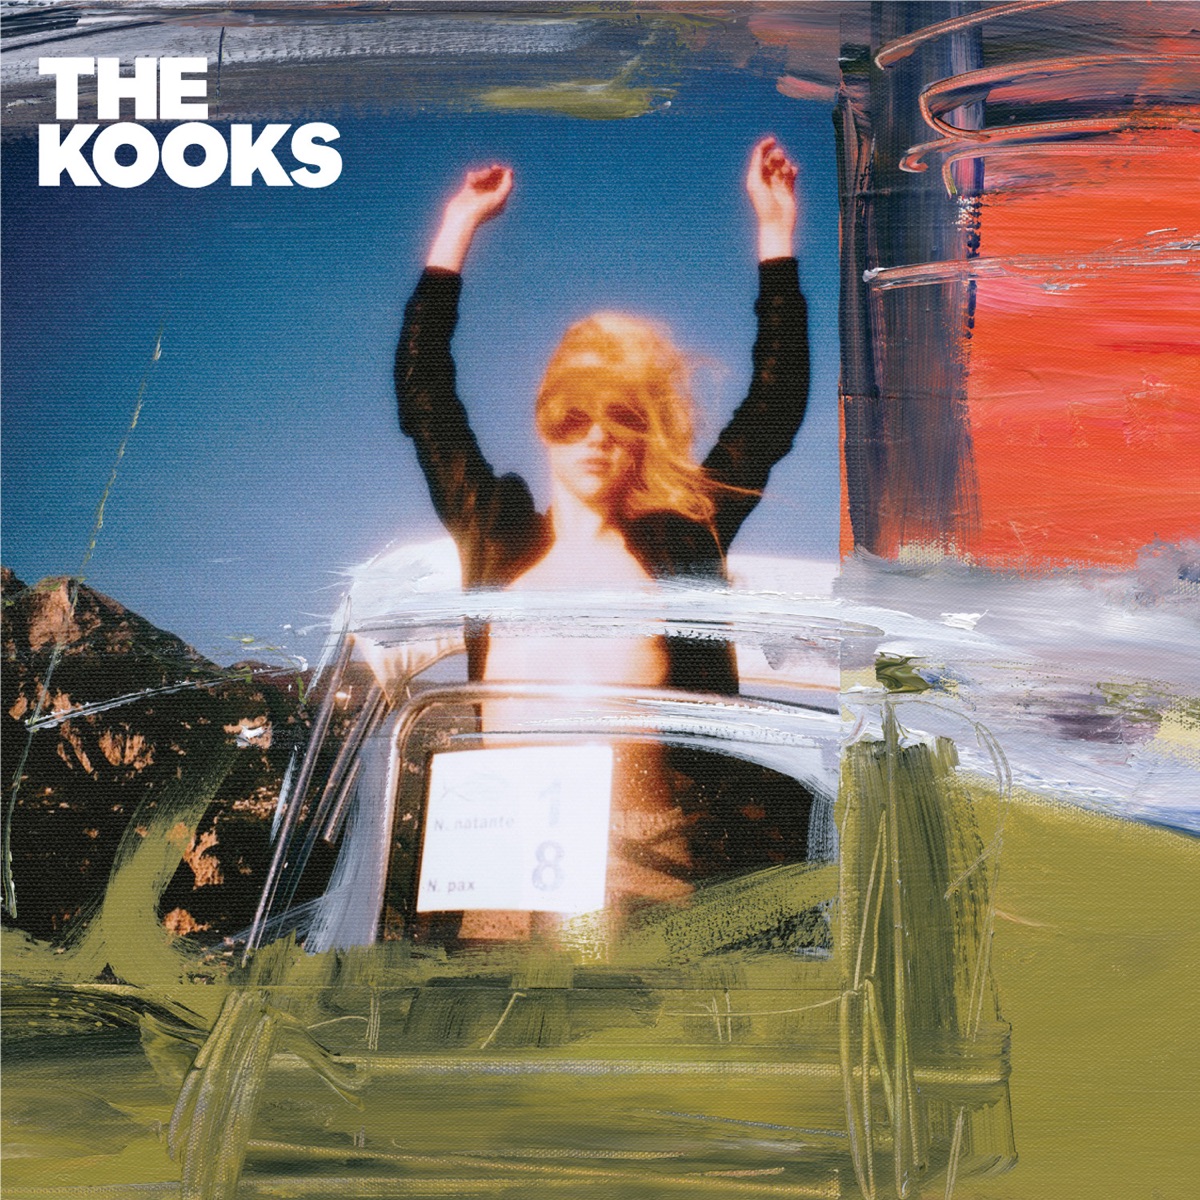 Konk - Album by The Kooks - Apple Music